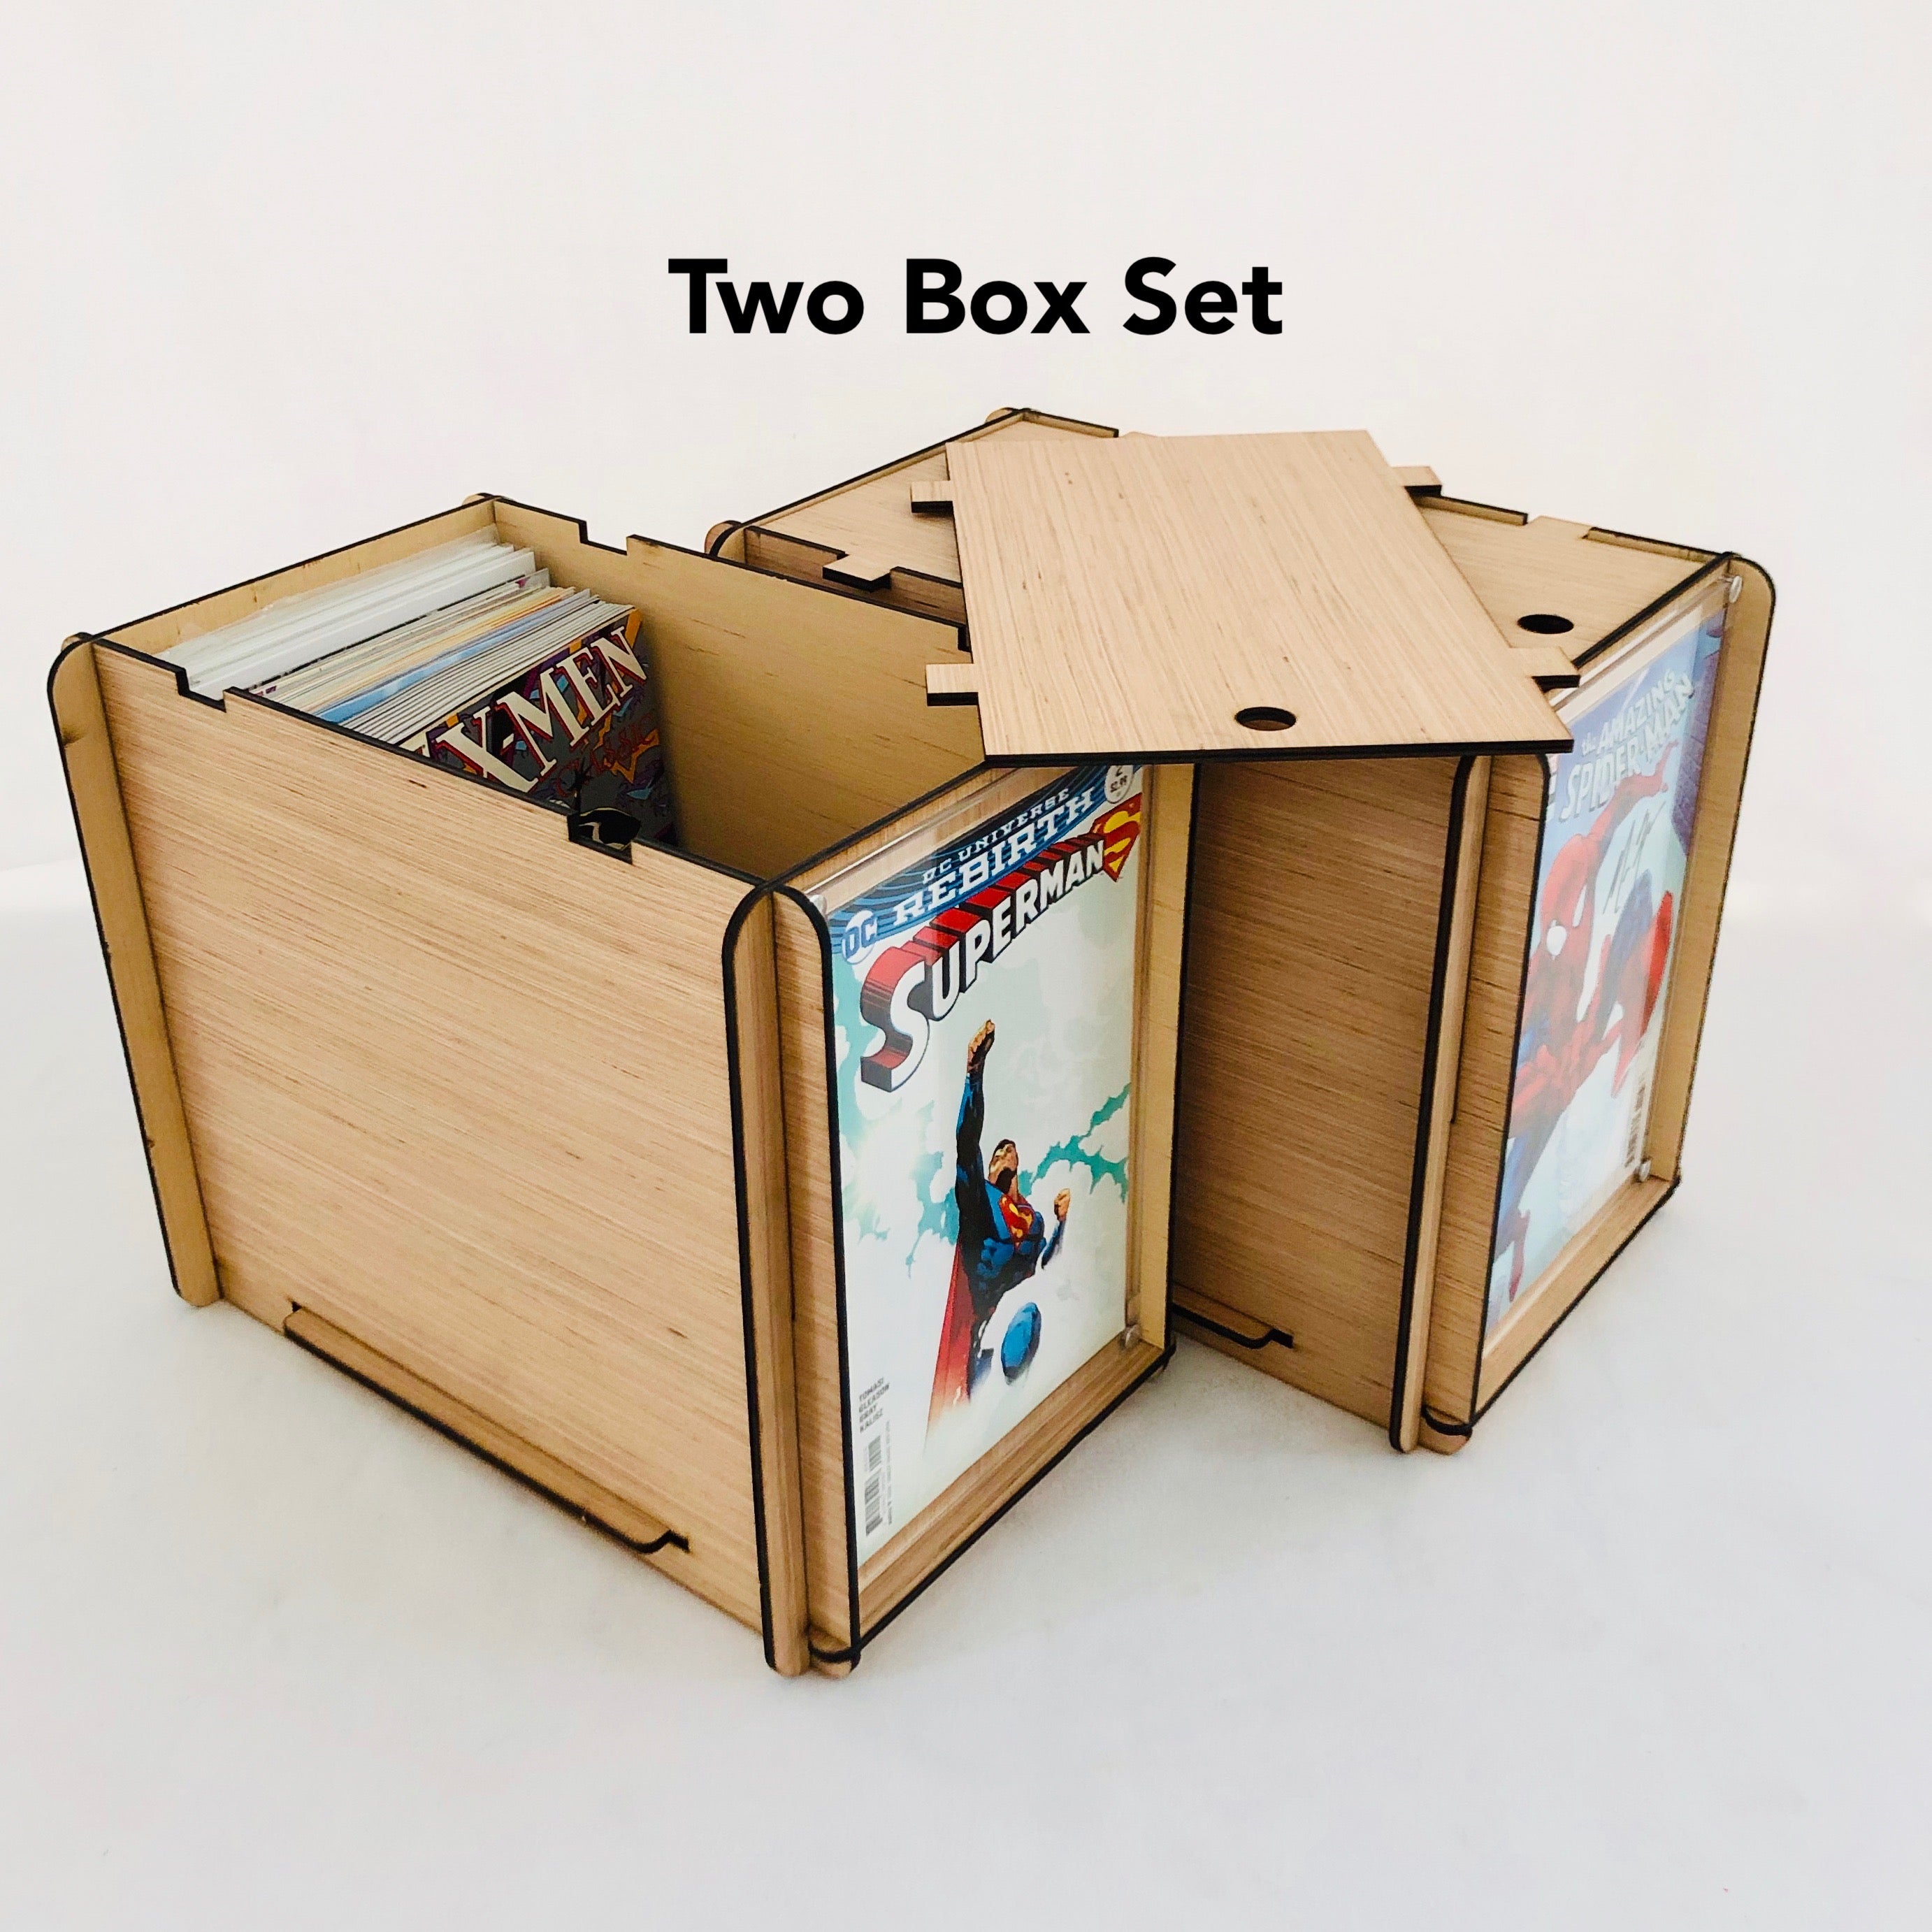  ETRONIK 2 Pack Comic Book Storage, Comic Book Boxes